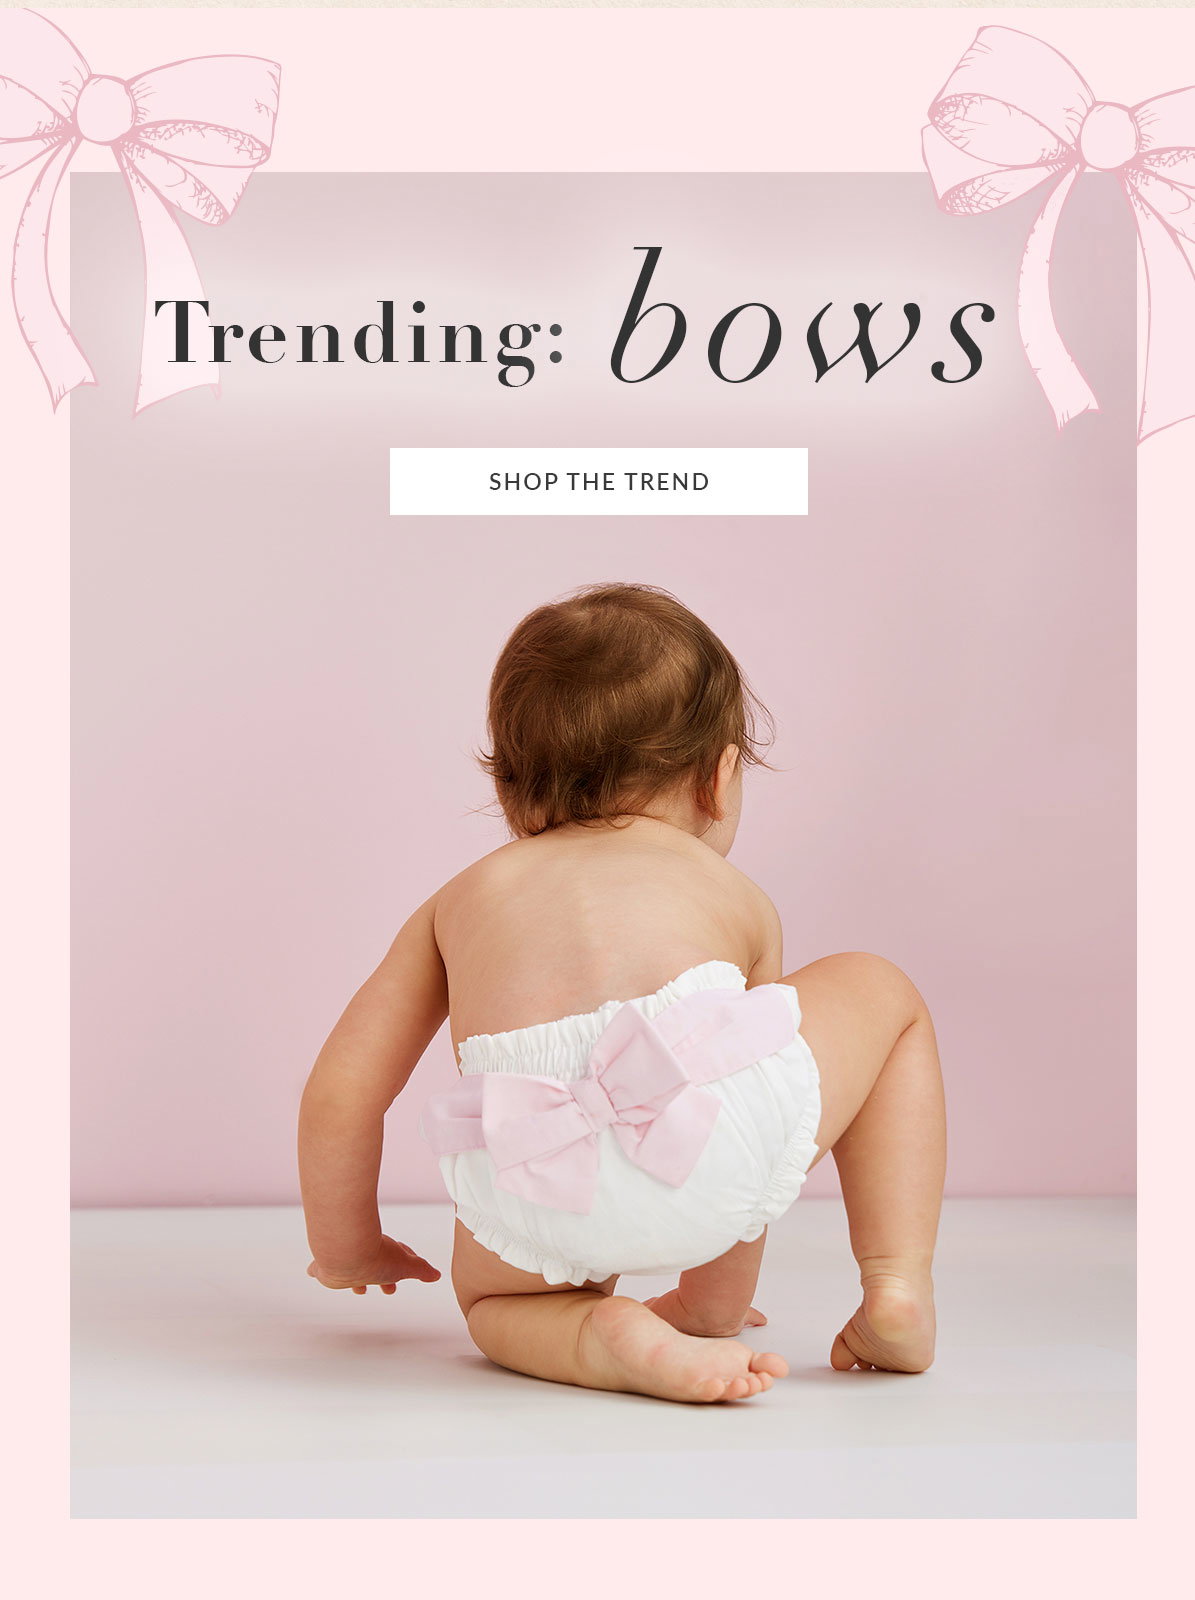 Trending bows